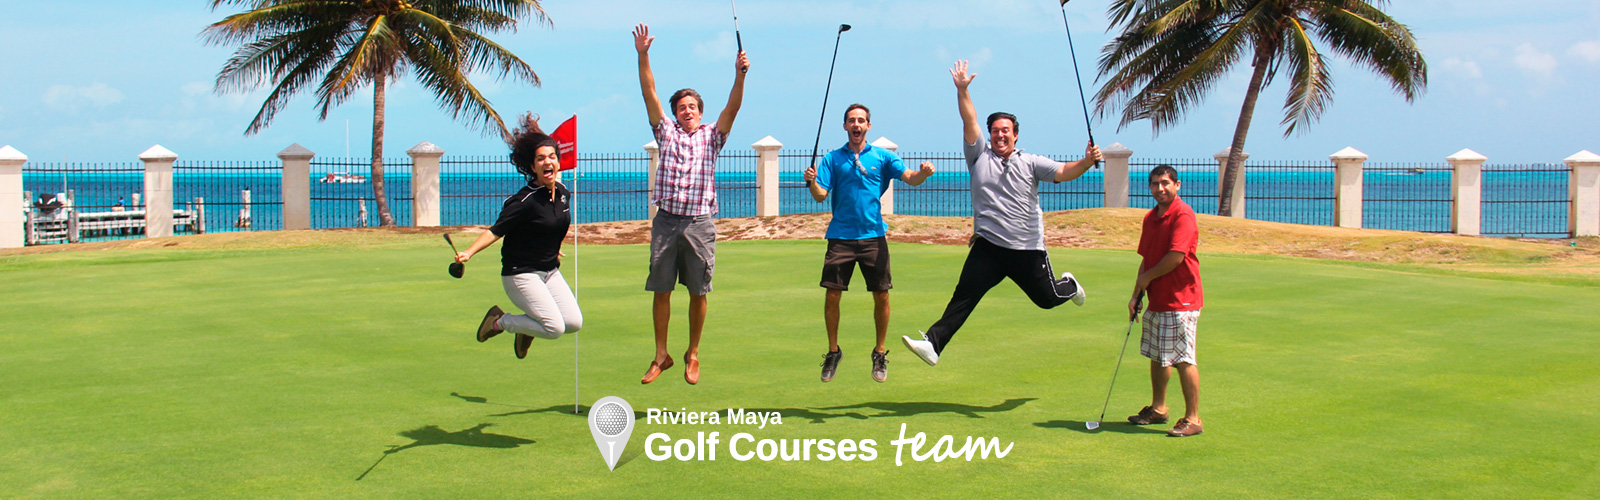 Riviera Maya Golf Courses Team